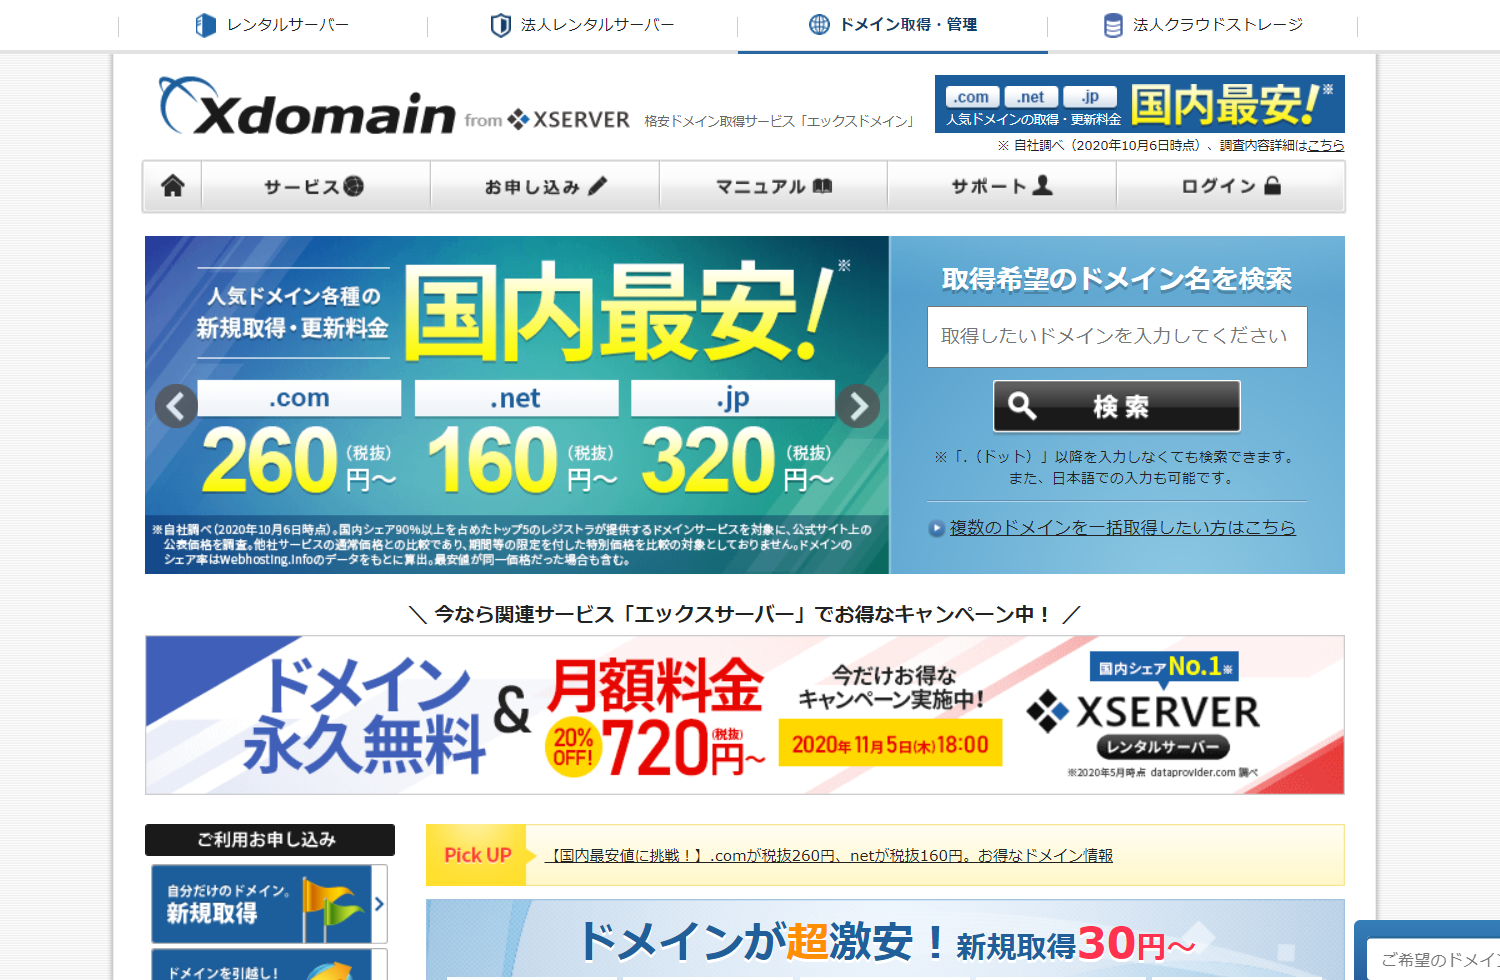 NaoYama Blogがおすすめするドメインサービス「Xserver ドメイン」